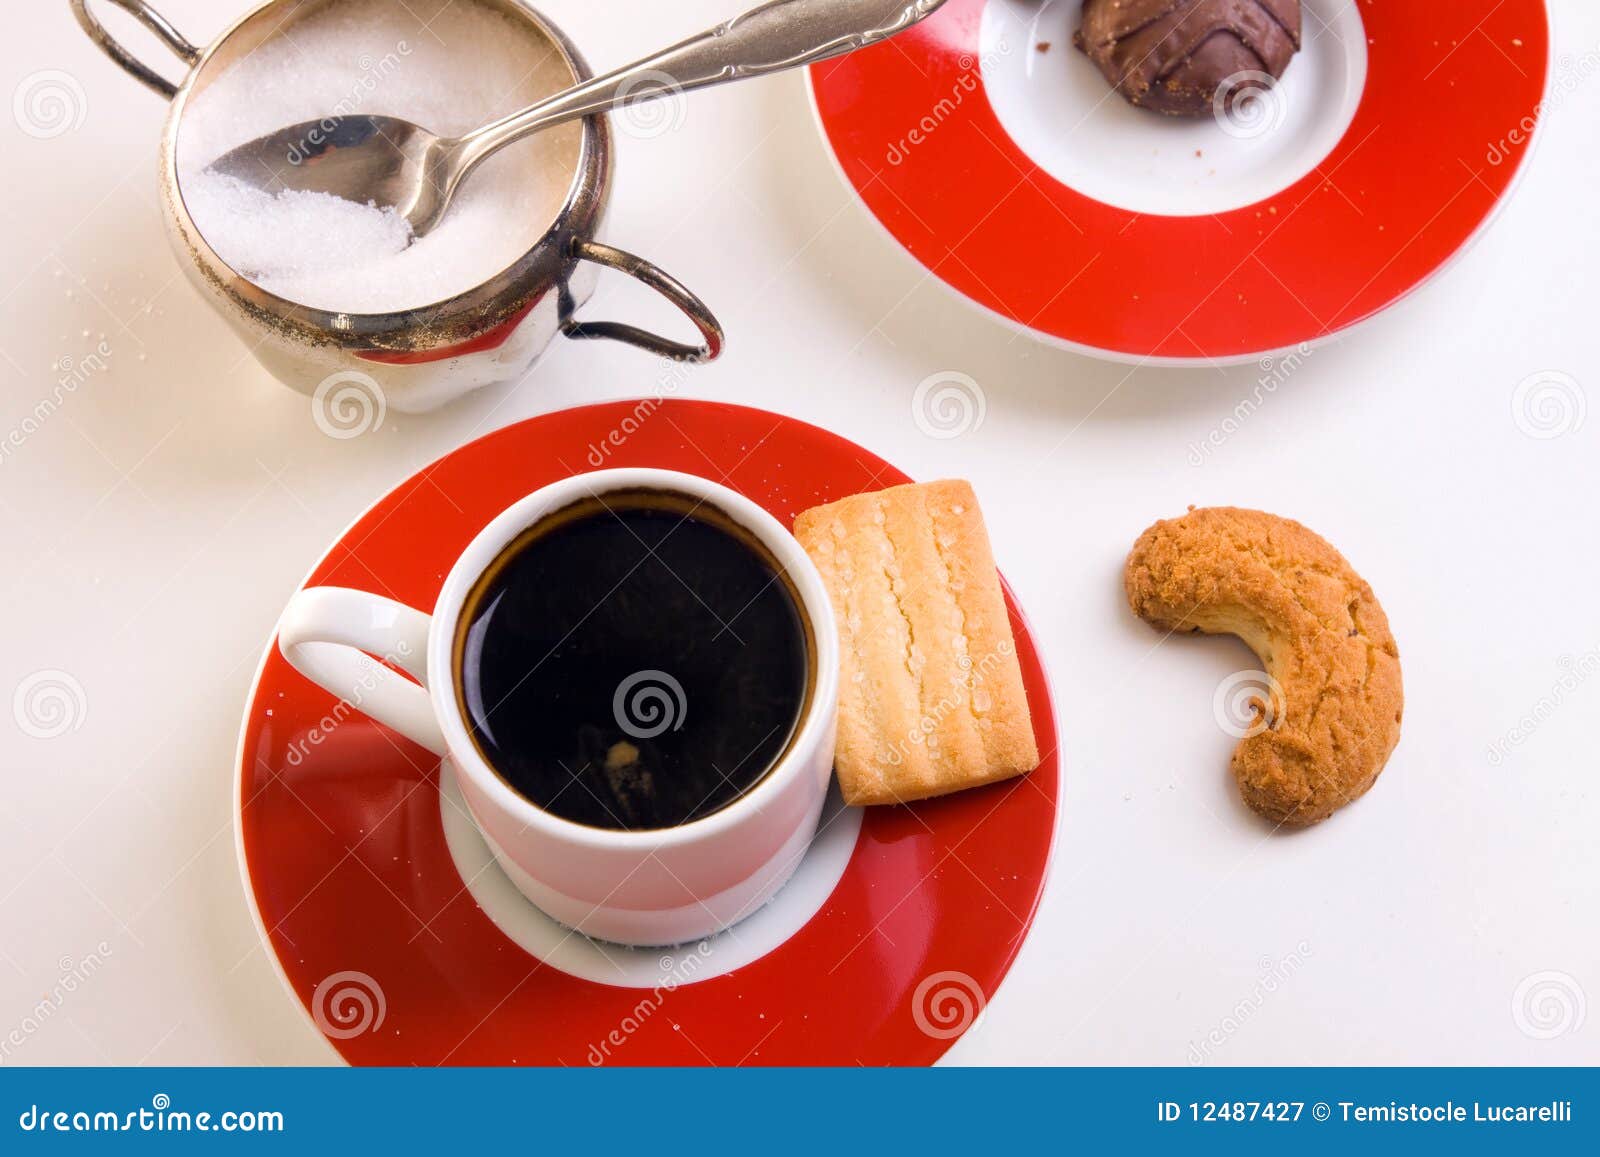 Coffee Break Royalty Free Stock Photography - Image: 12487427